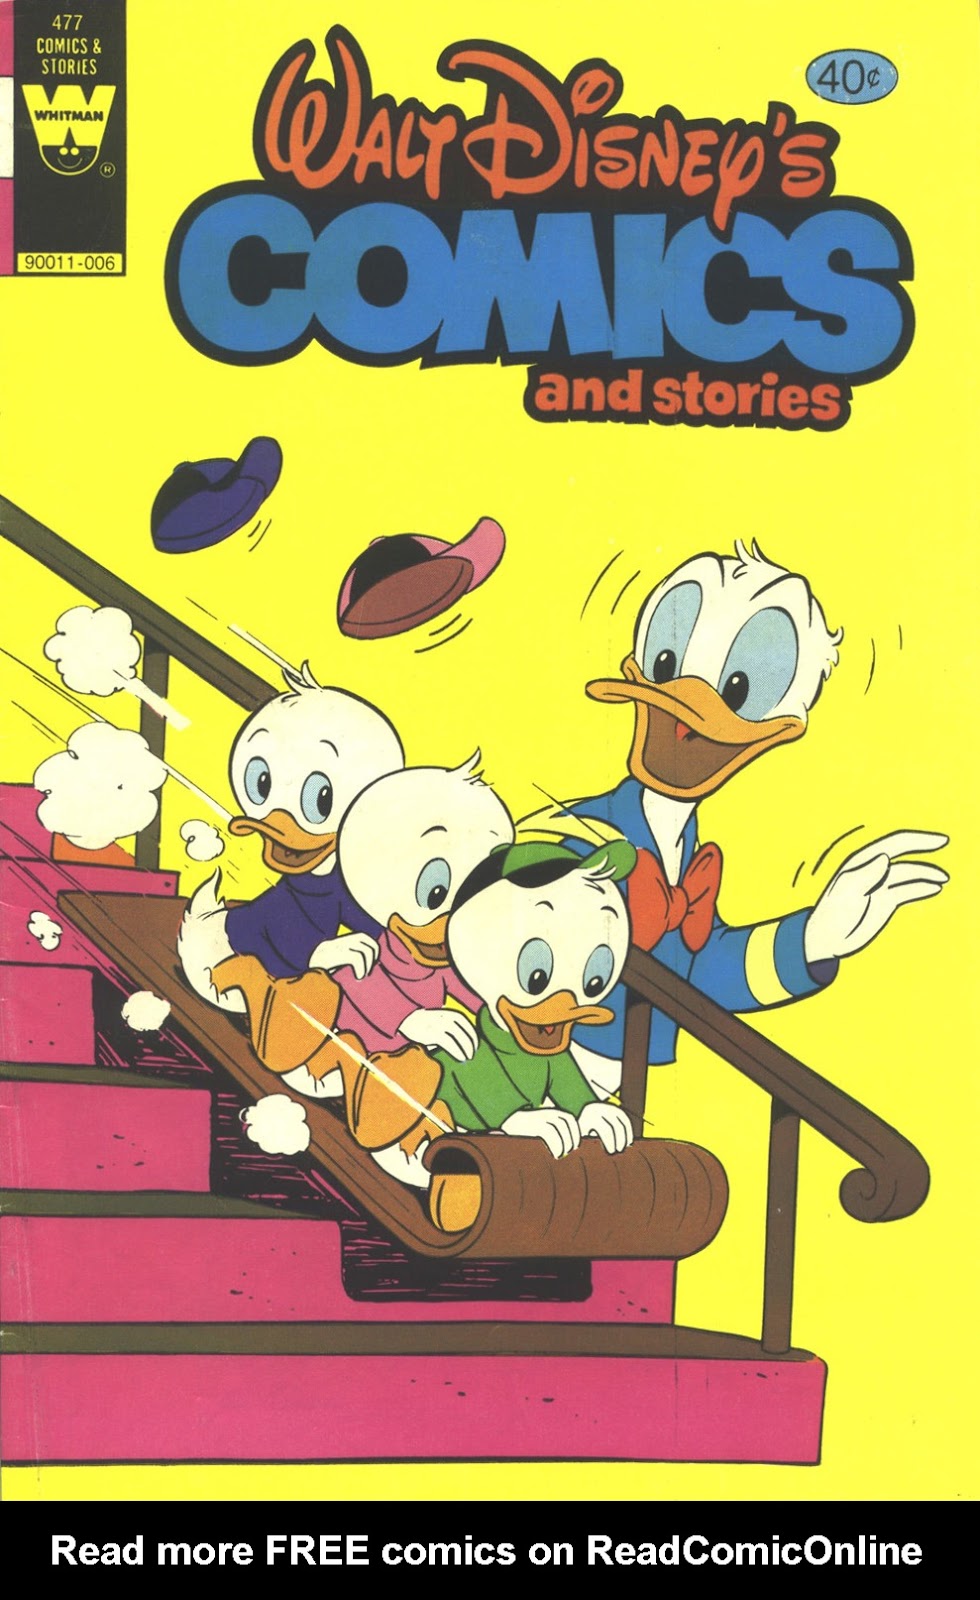 Walt Disneys Comics and Stories 477 Page 1